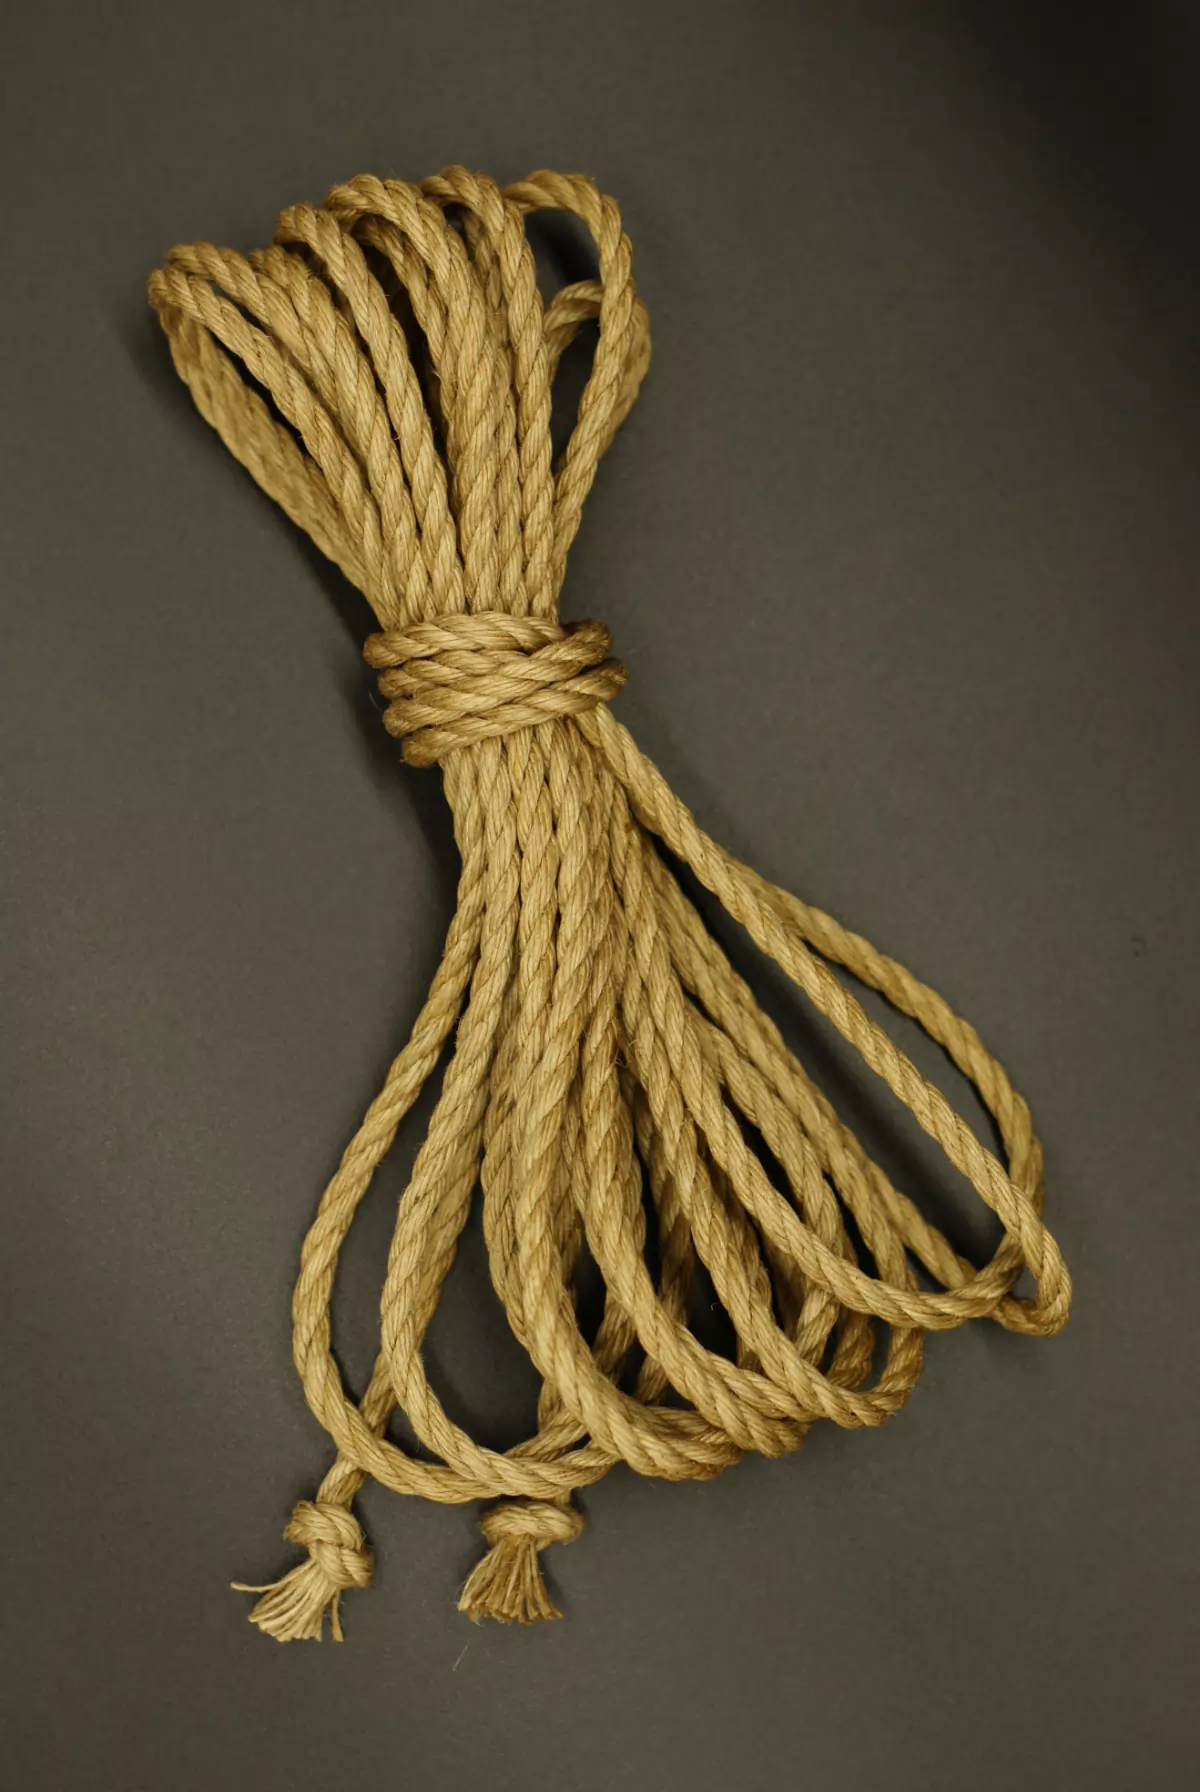 ∅ 6mm jute rope, ready-to-use, various lengths, vegan